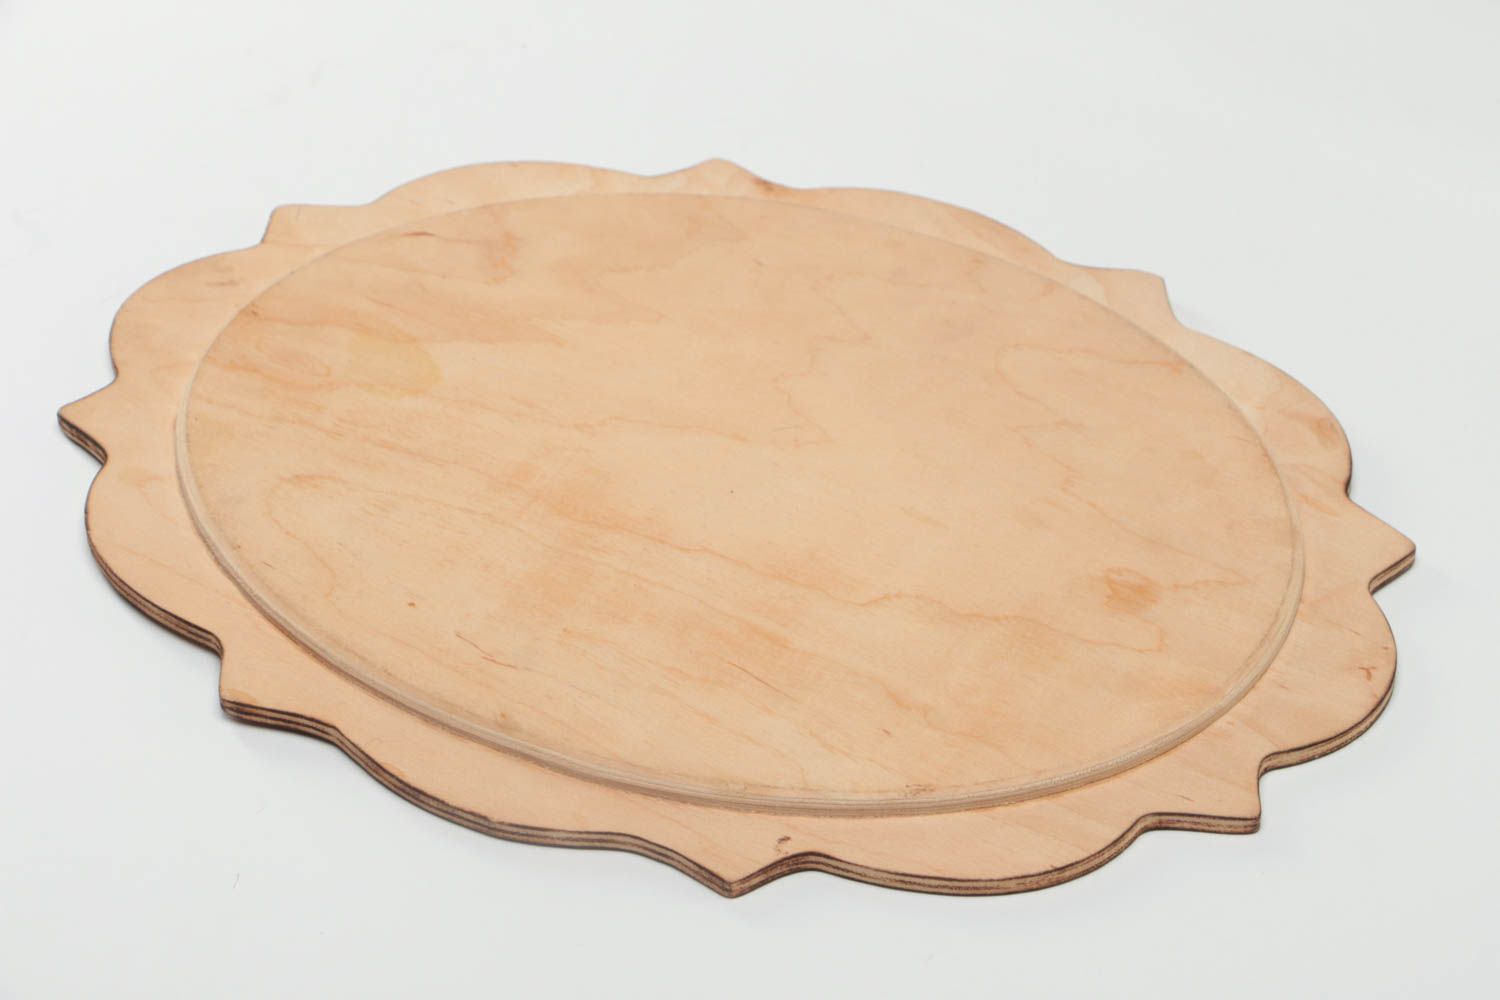 Handmade decorative plate wooden plate home decor housewarming gift ideas photo 4